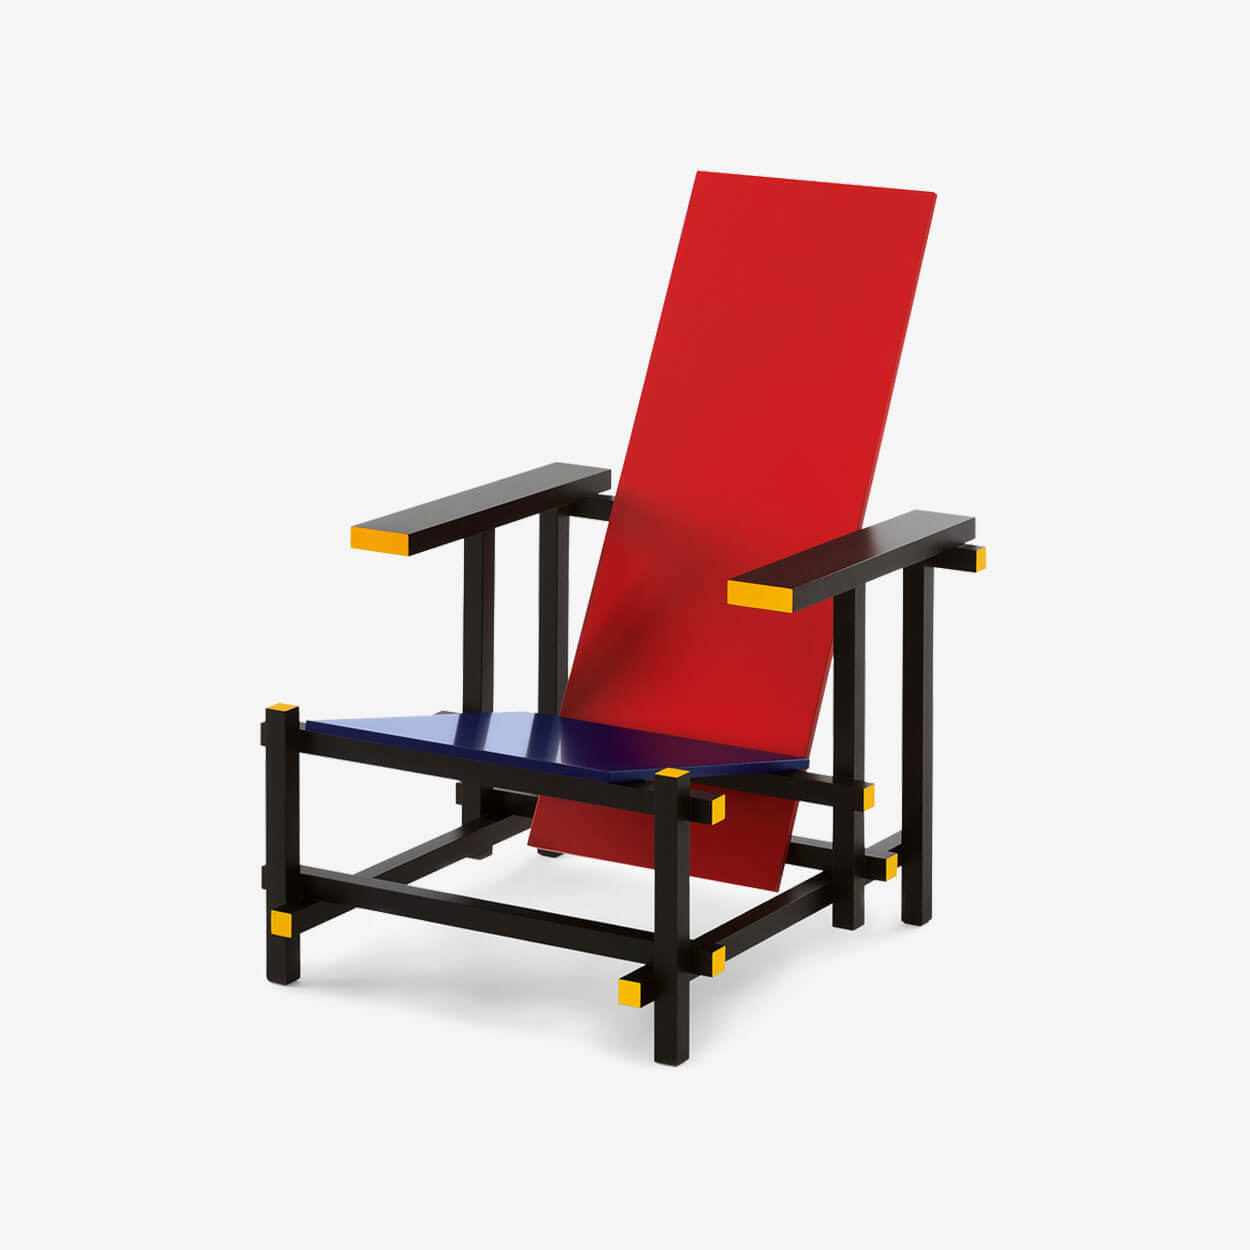 acre Normaal aansporing Red and Blue chair (Cassina) | Rietveld Originals